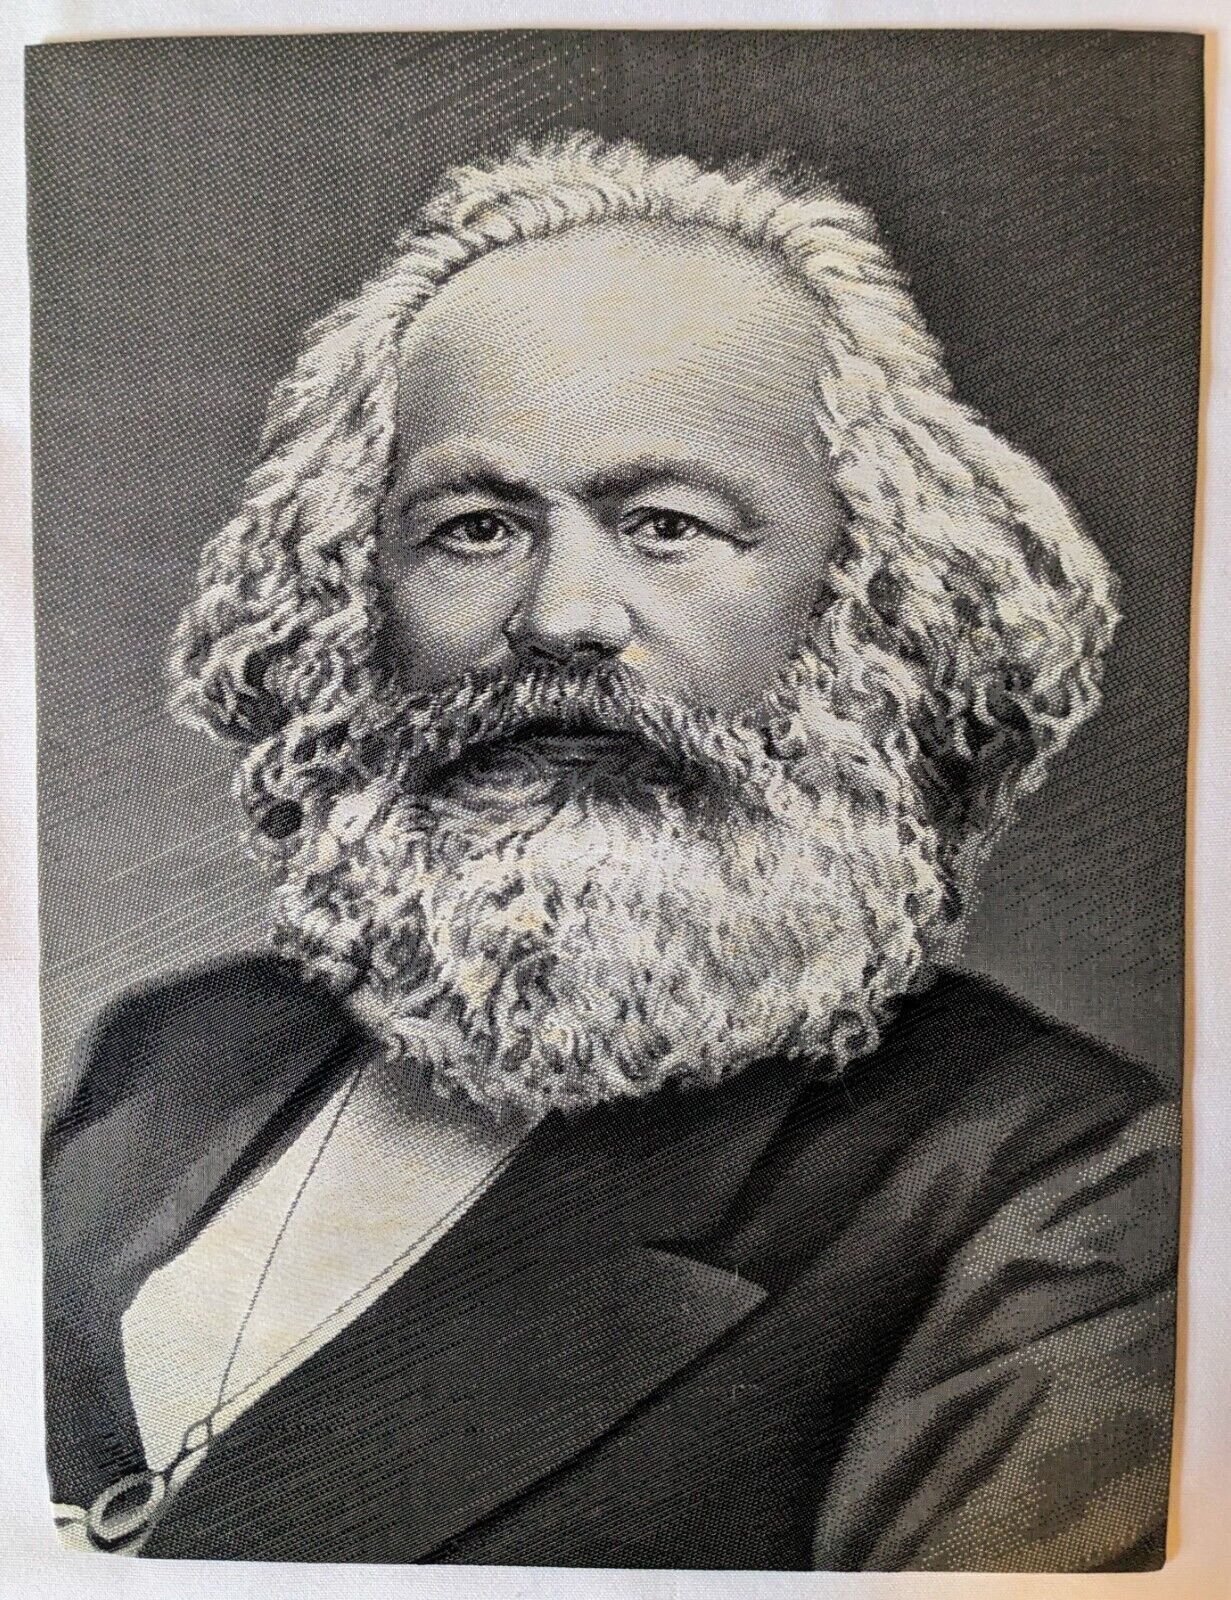 KARL MARX Silk Woven  Portrait of Philosopher & Socialist Revolutionary